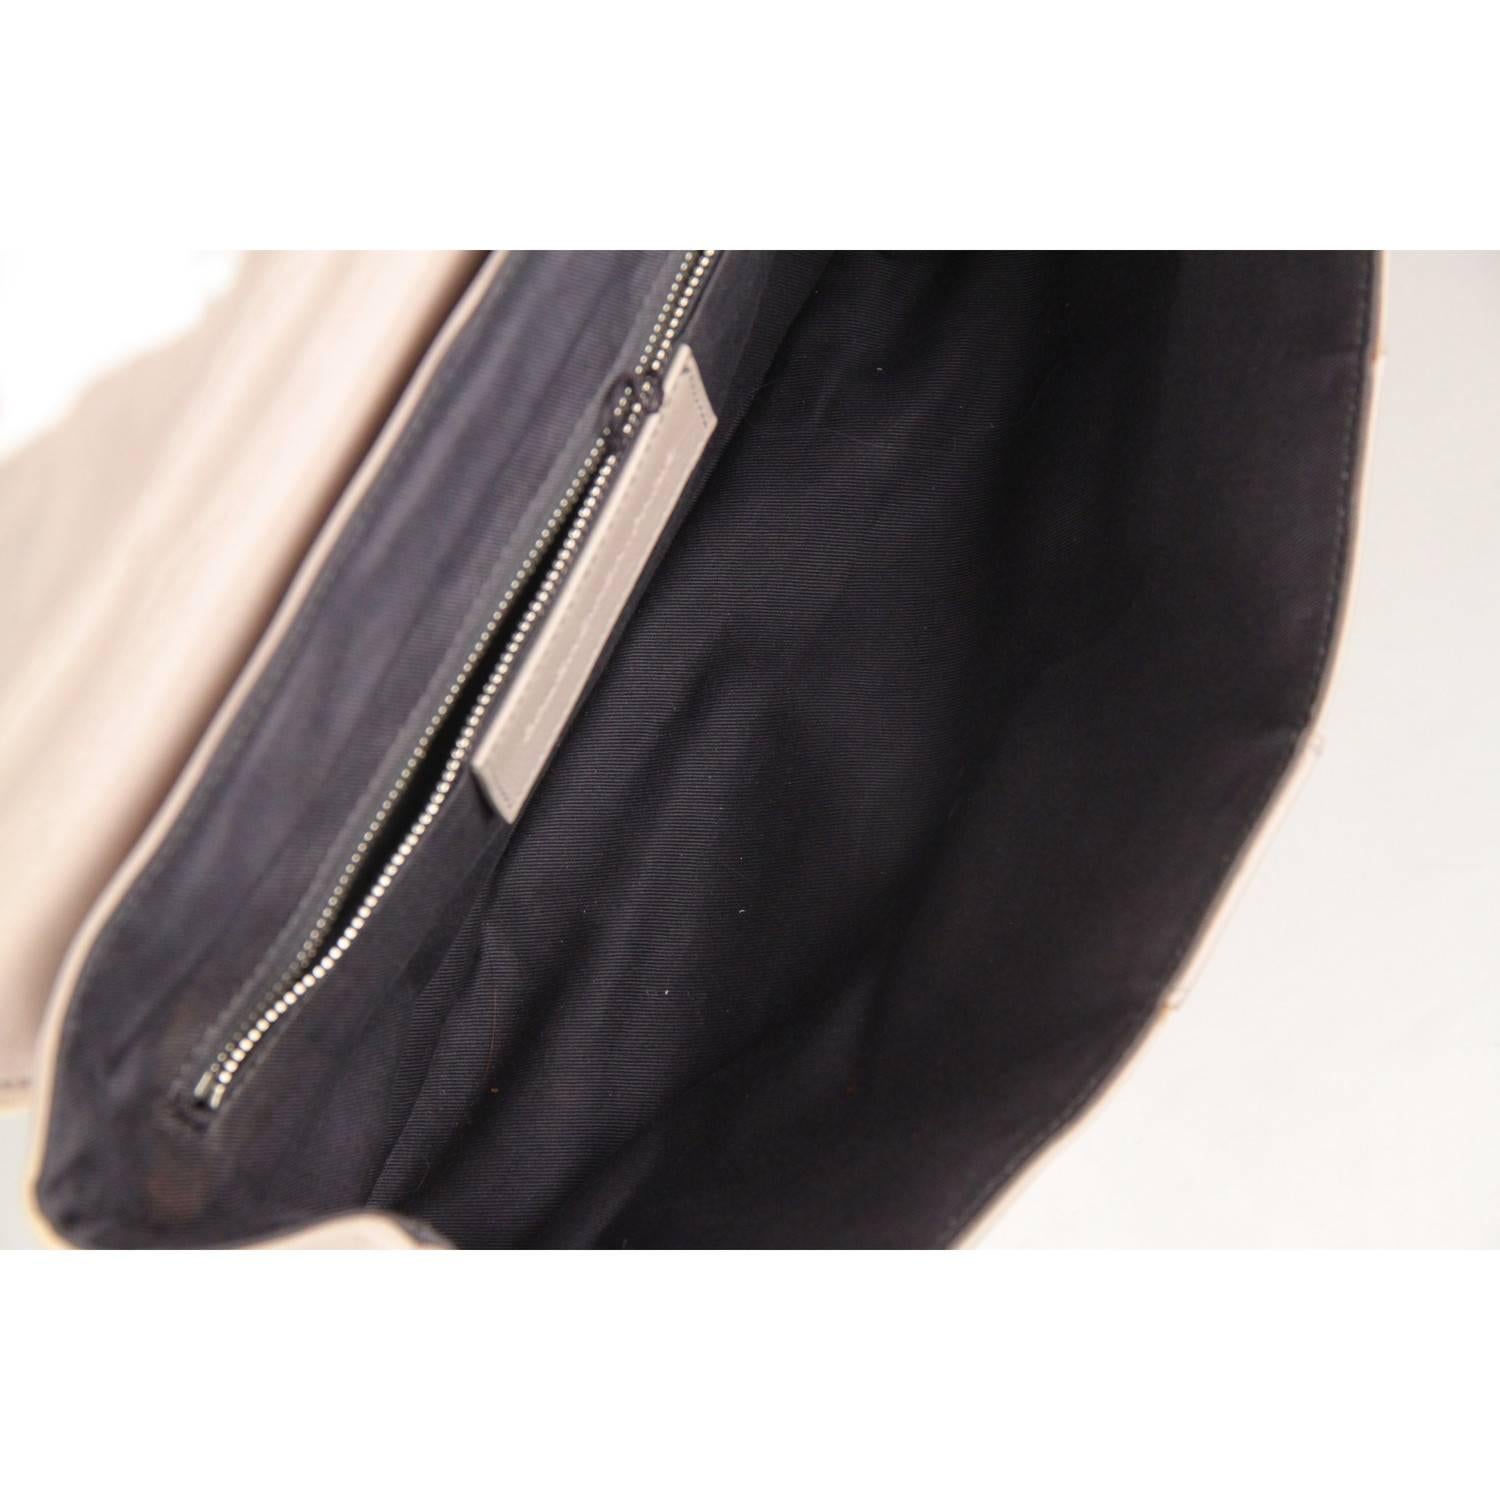 Balenciaga Tricolor Gray Leather Cherche Midi Clutch Bag Handbag 4